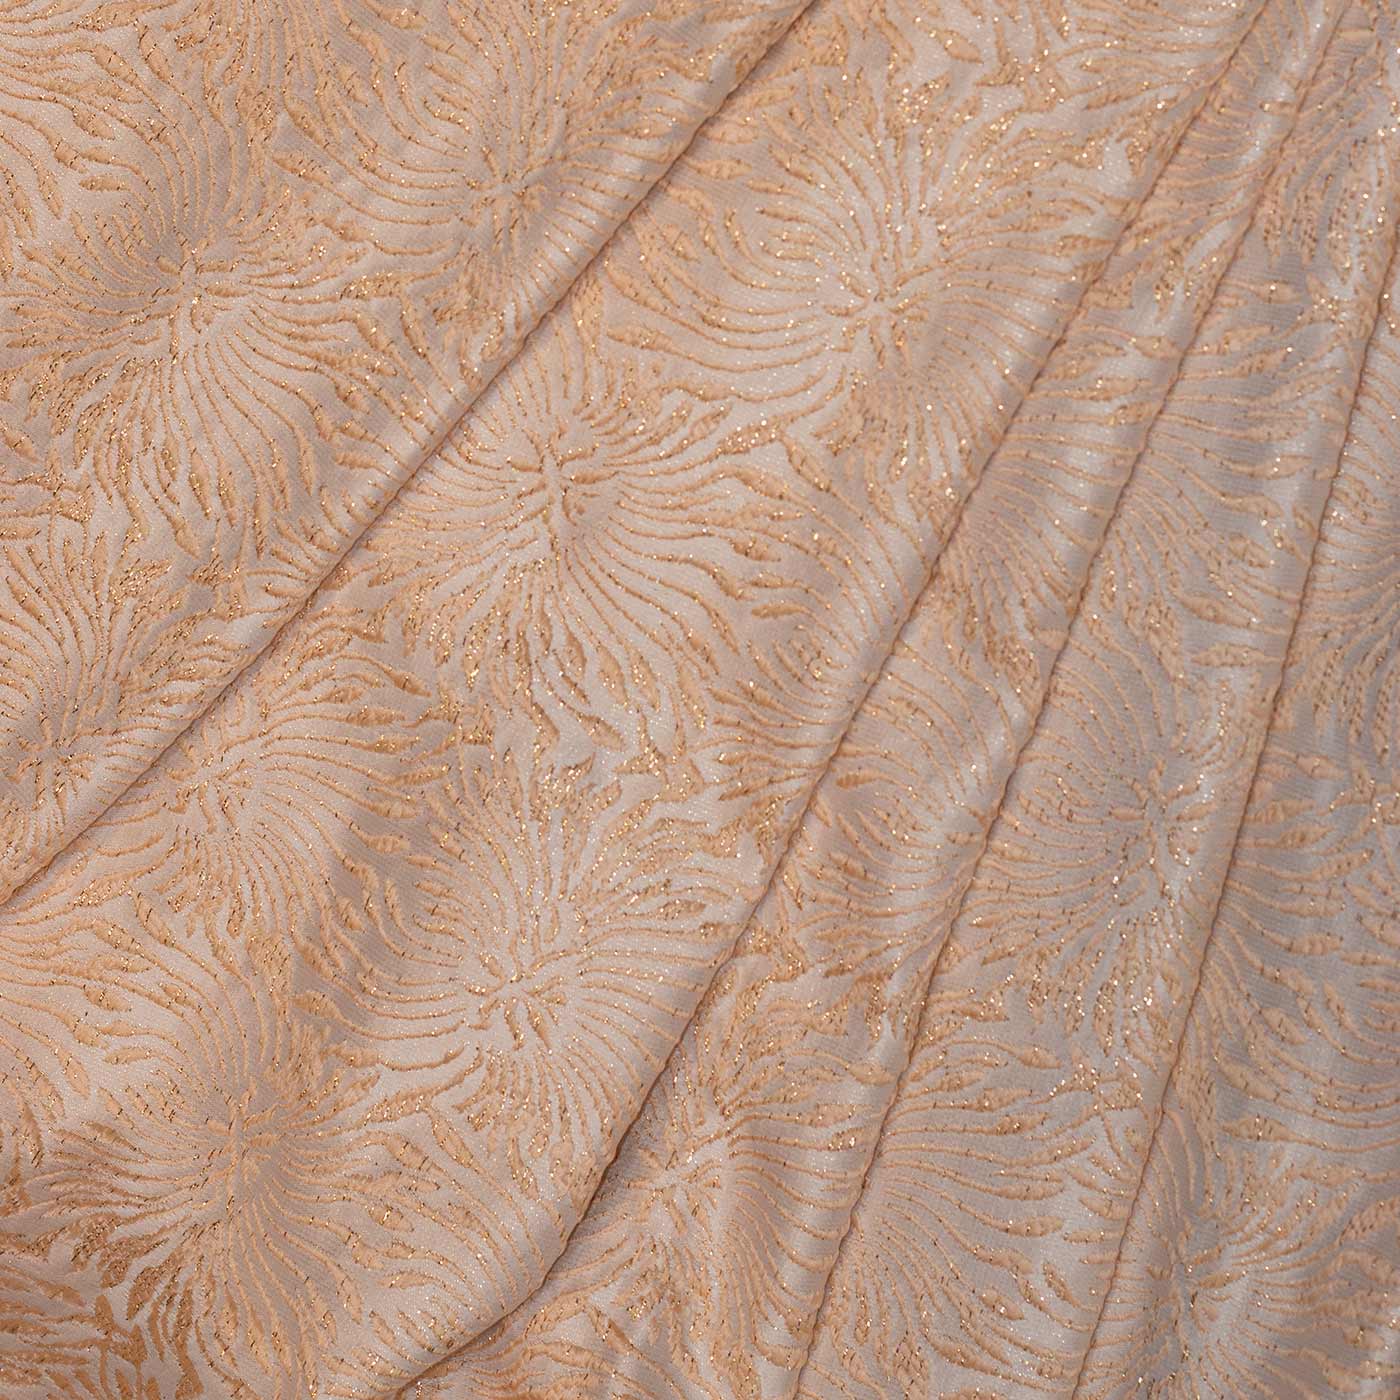 Peach Abstract Design Brocade Fabric